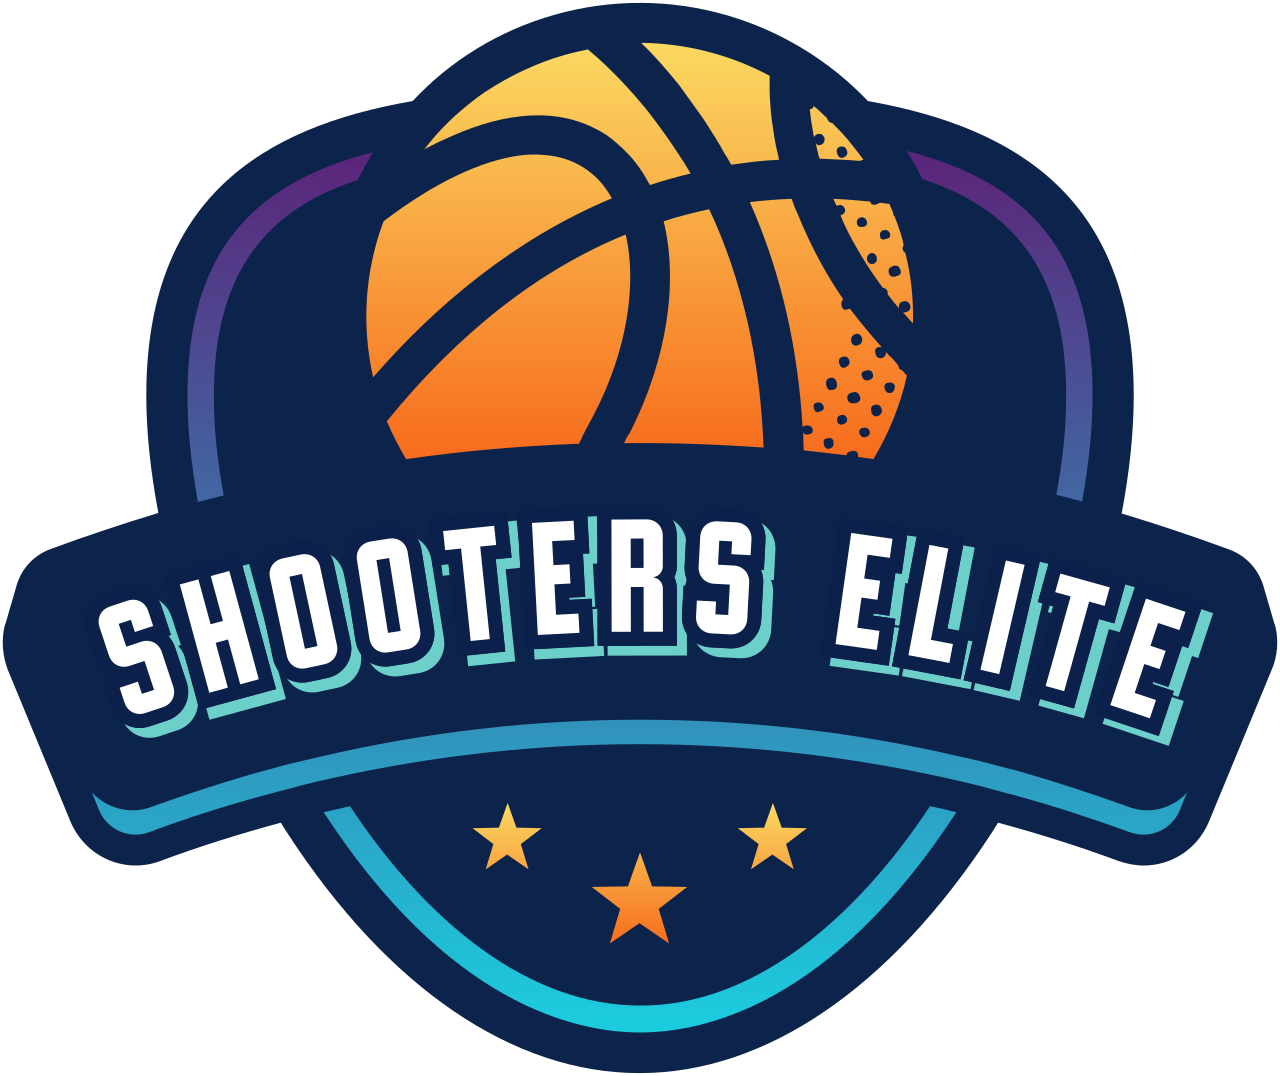 SHOOTERS ELITE's logo